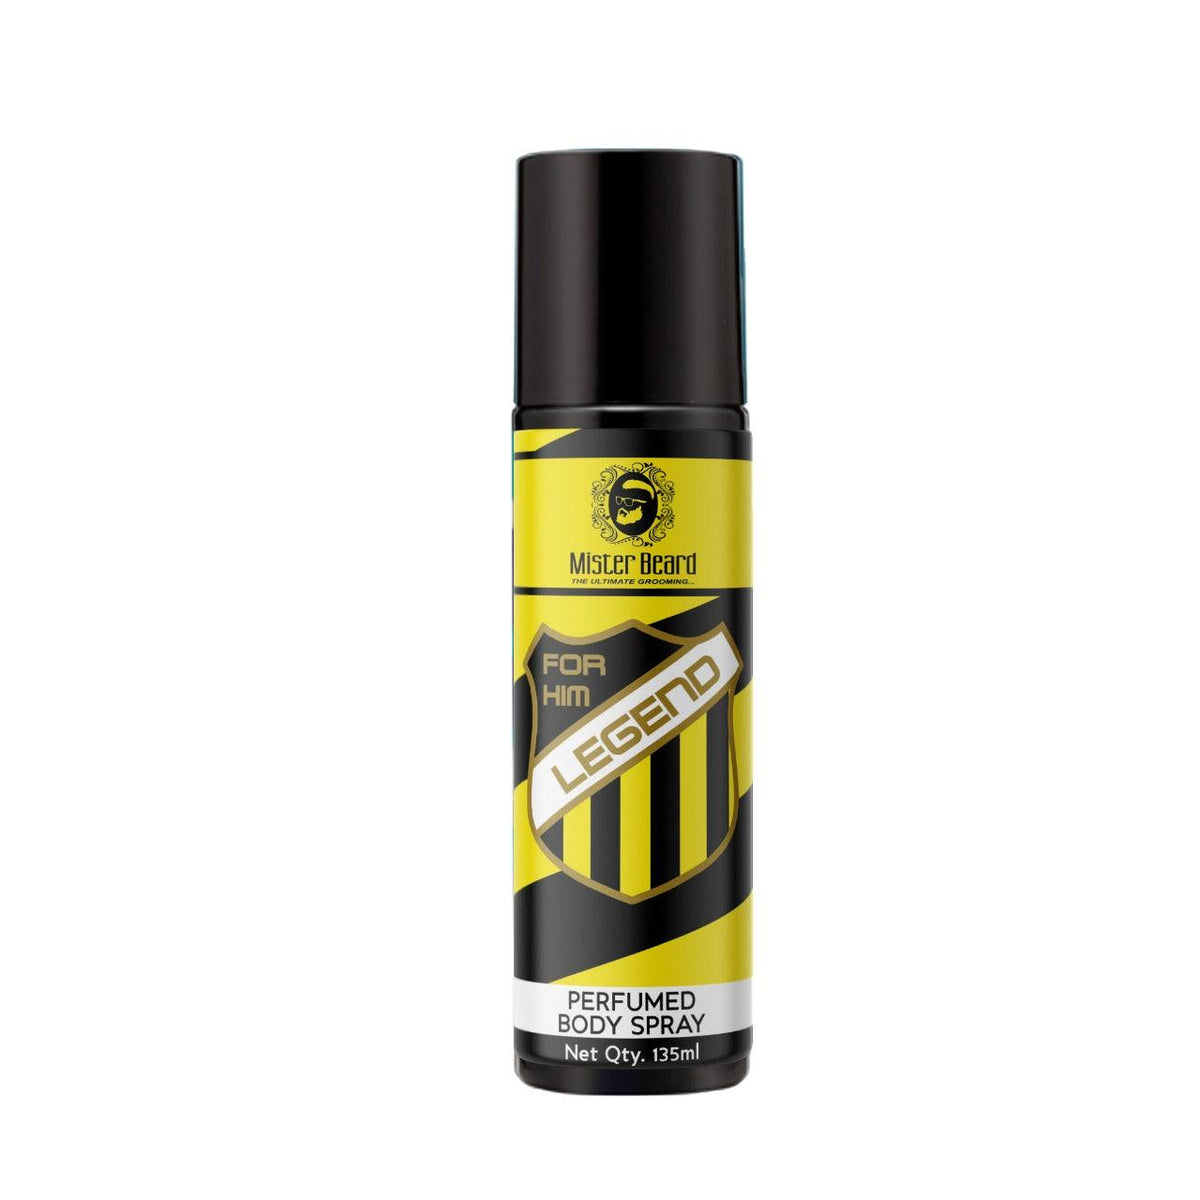 Mister Beard Legend Deodorant Spray Body Spray - For Men 135 ml - Pink Root